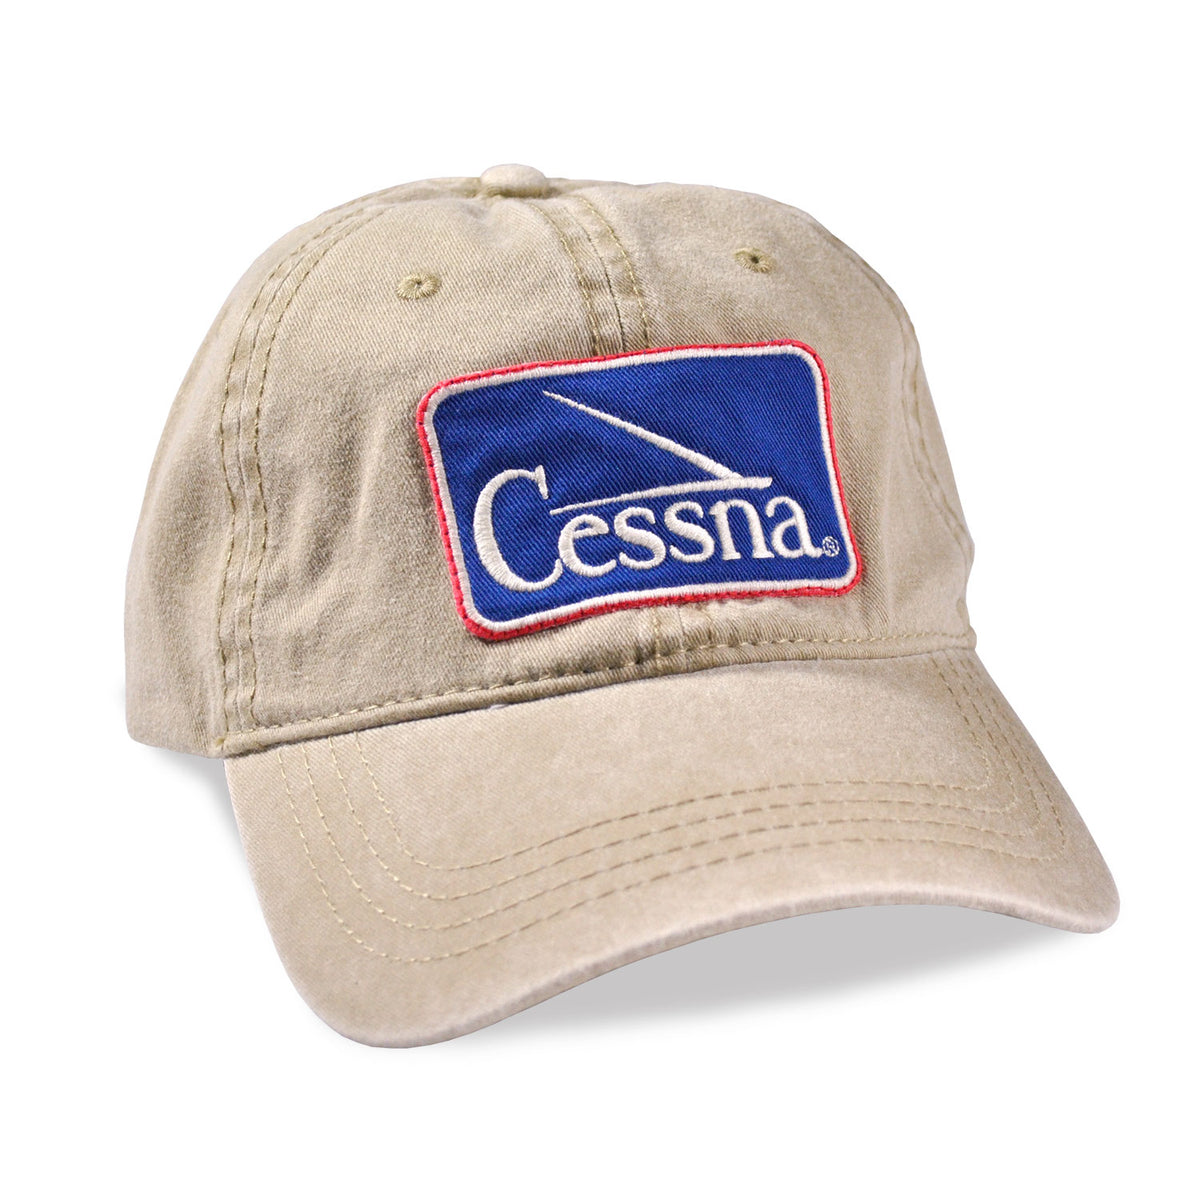 Cessna Logo Adjustable Cap